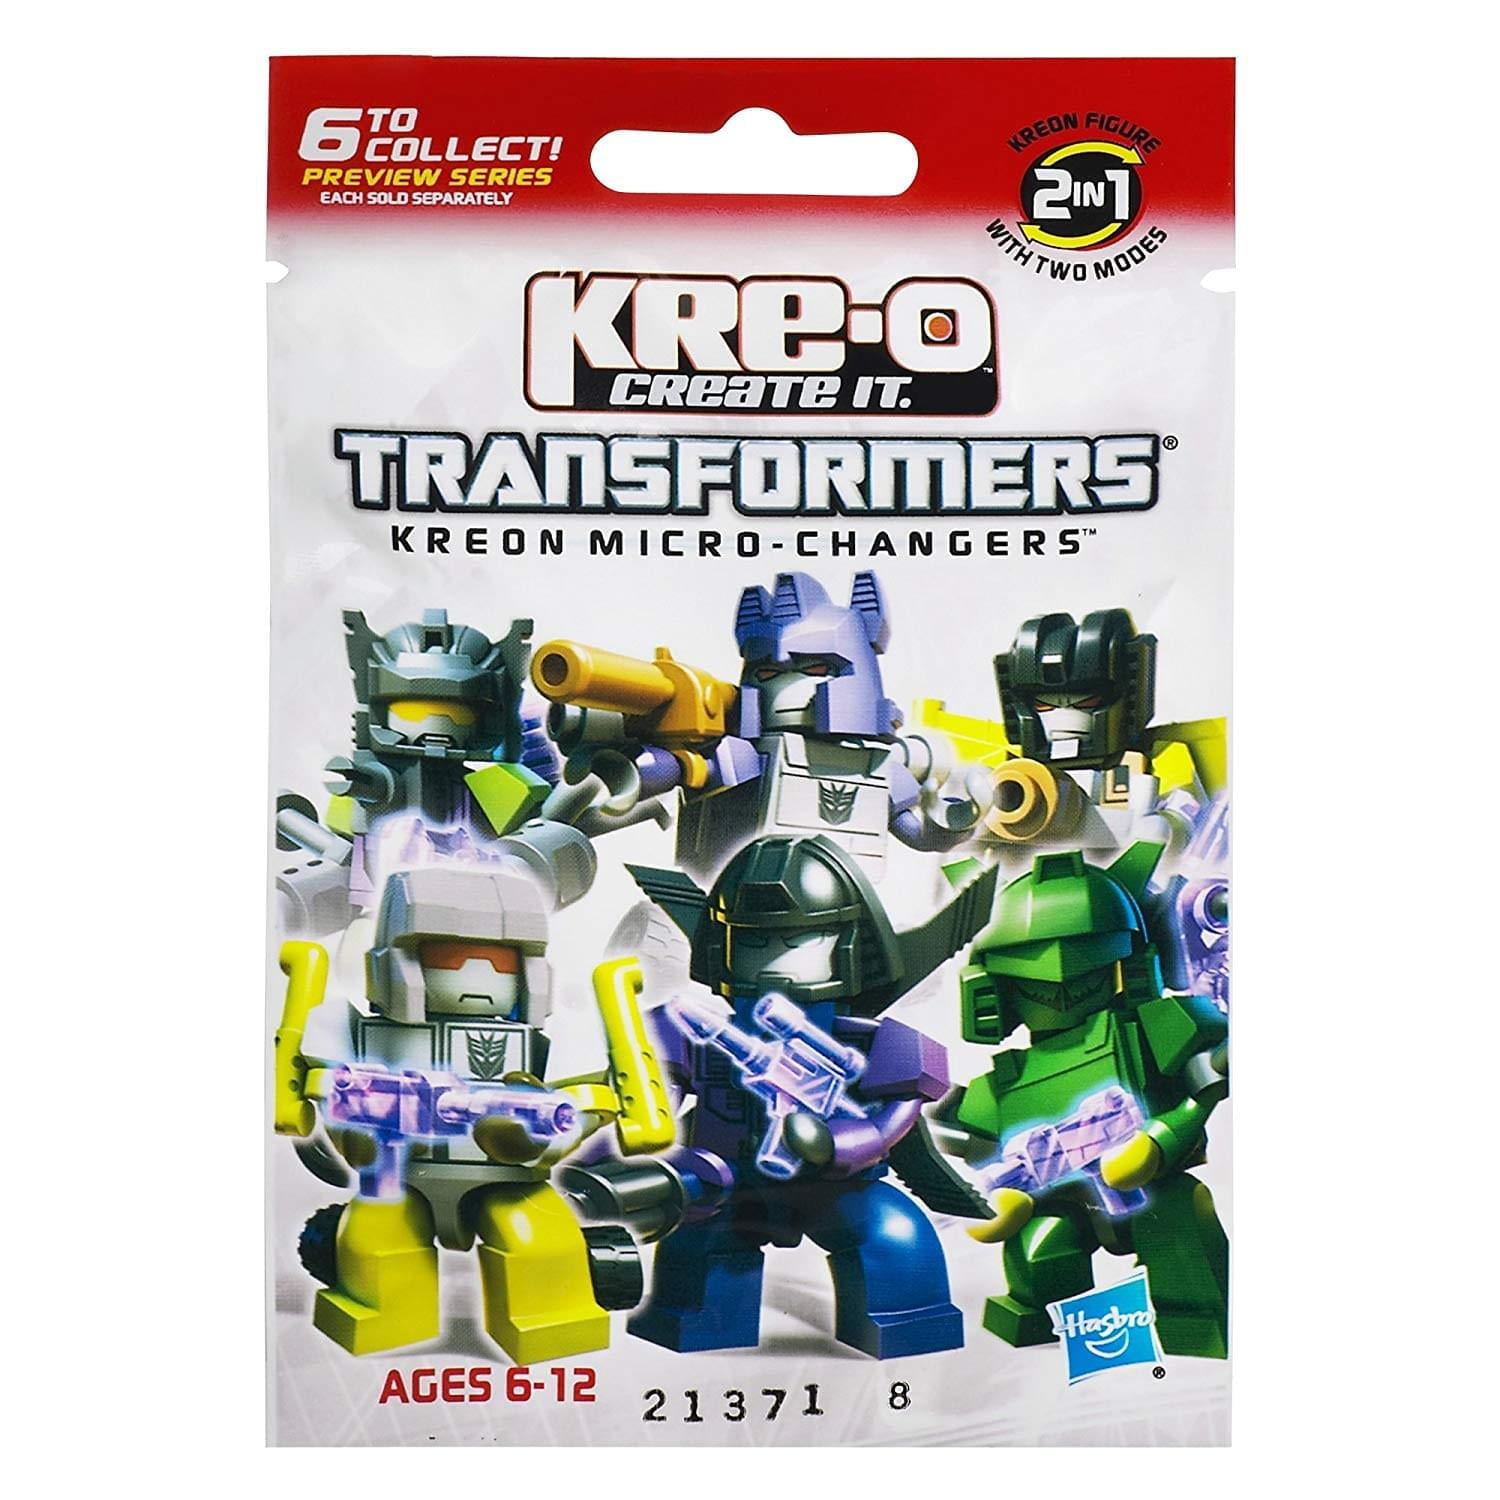 CHEETOR Transformers Kre-o Micro-Changers Series 3 59 Kreon New 